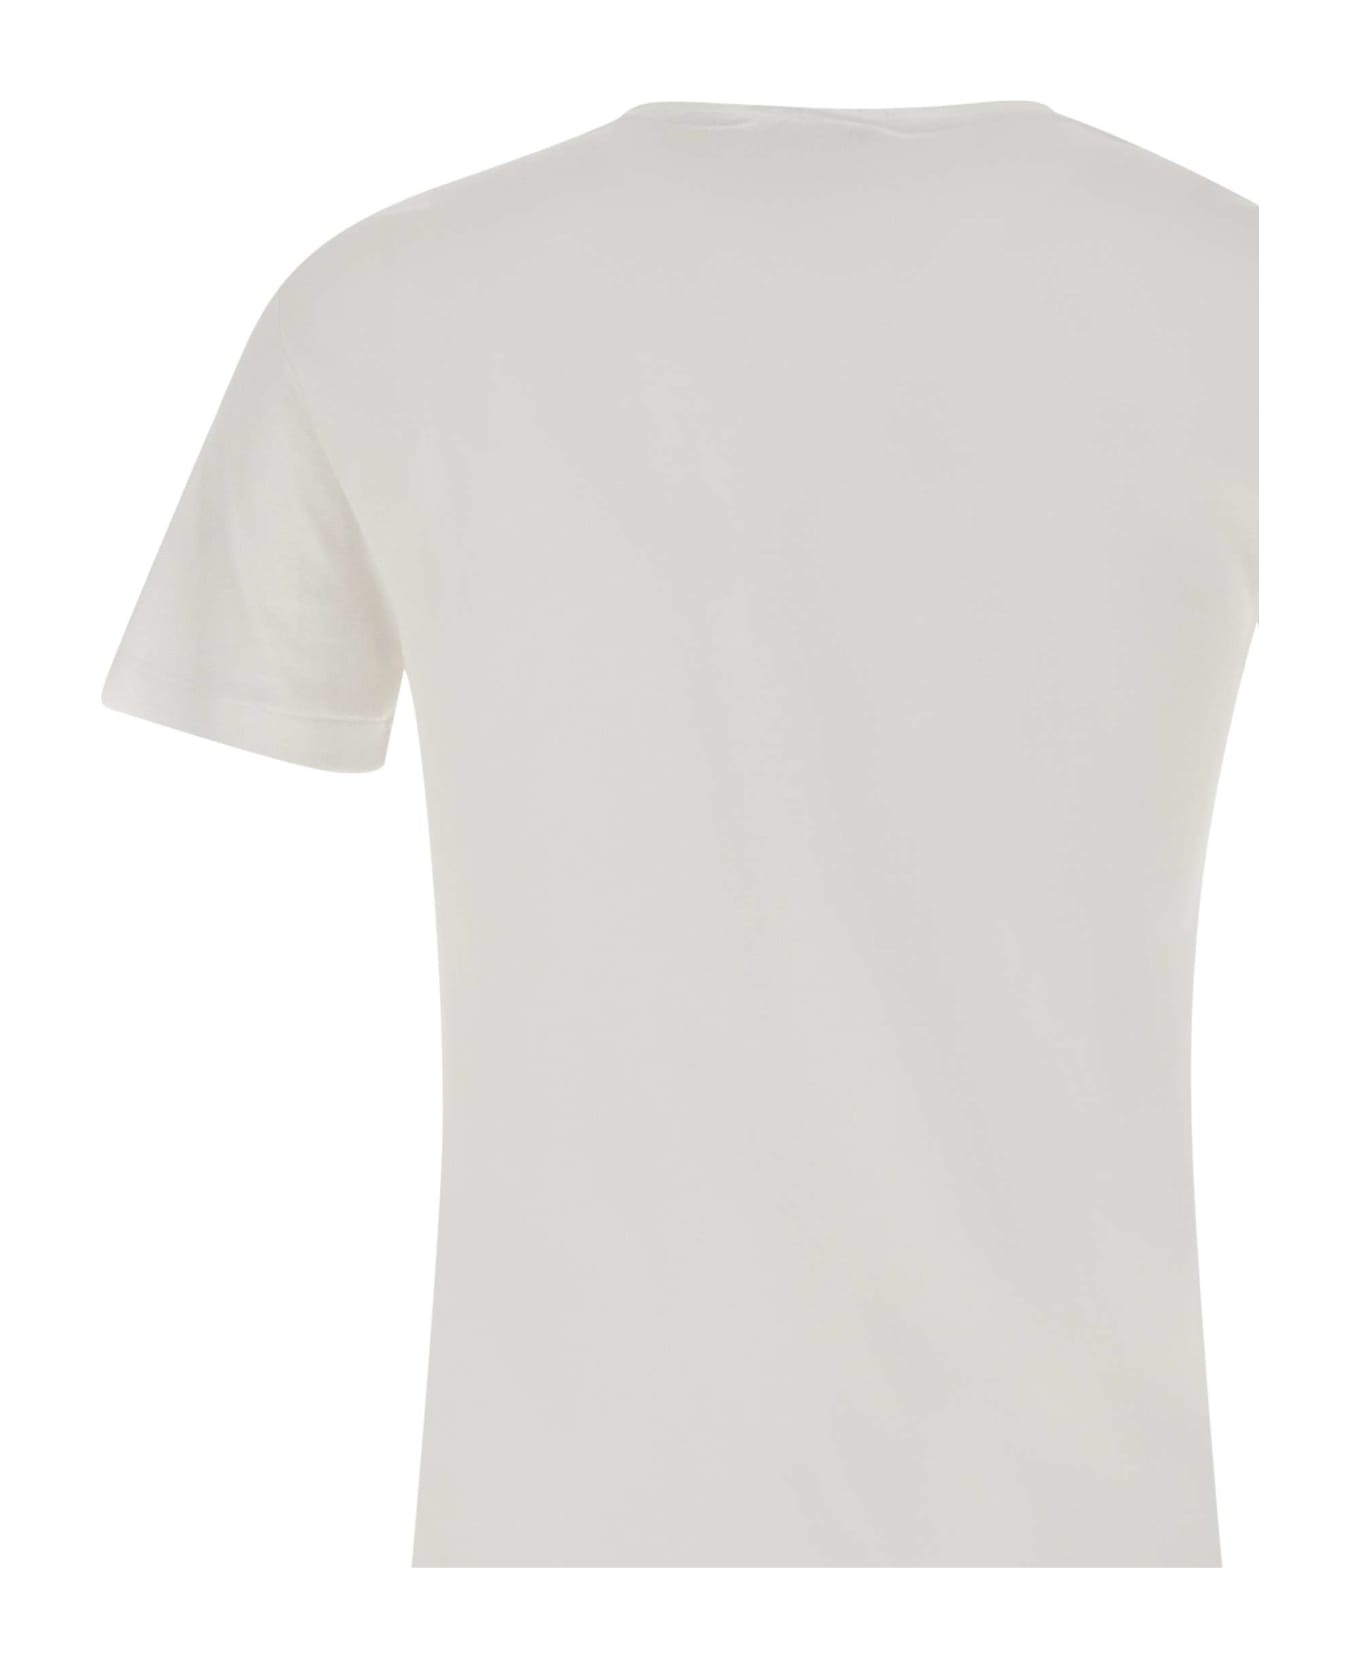 Polo Ralph Lauren Cotton T-shirt - WHITE シャツ